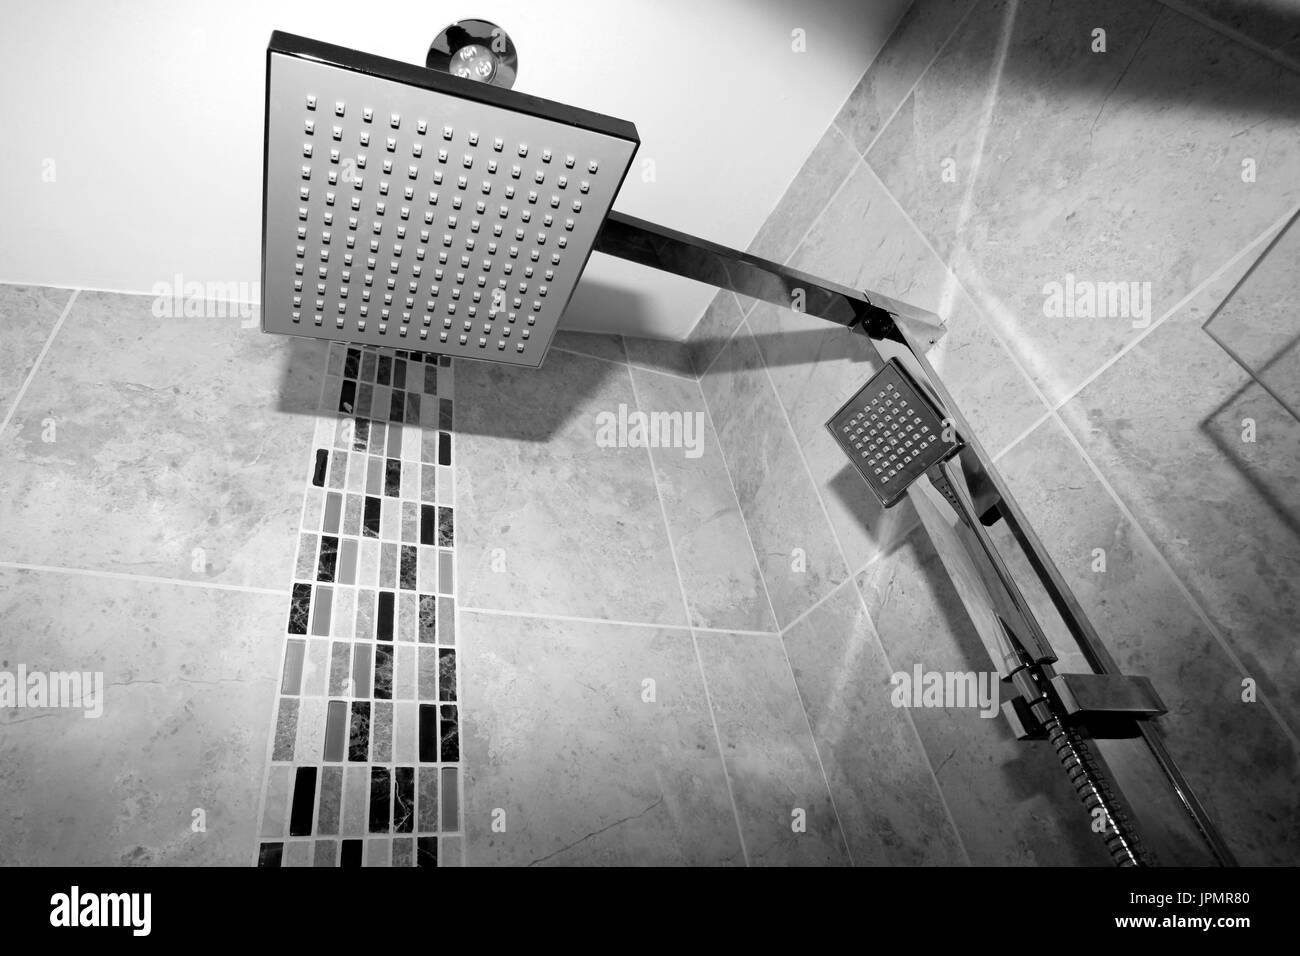 bathroom, shower room, modern interior design Stock Photo